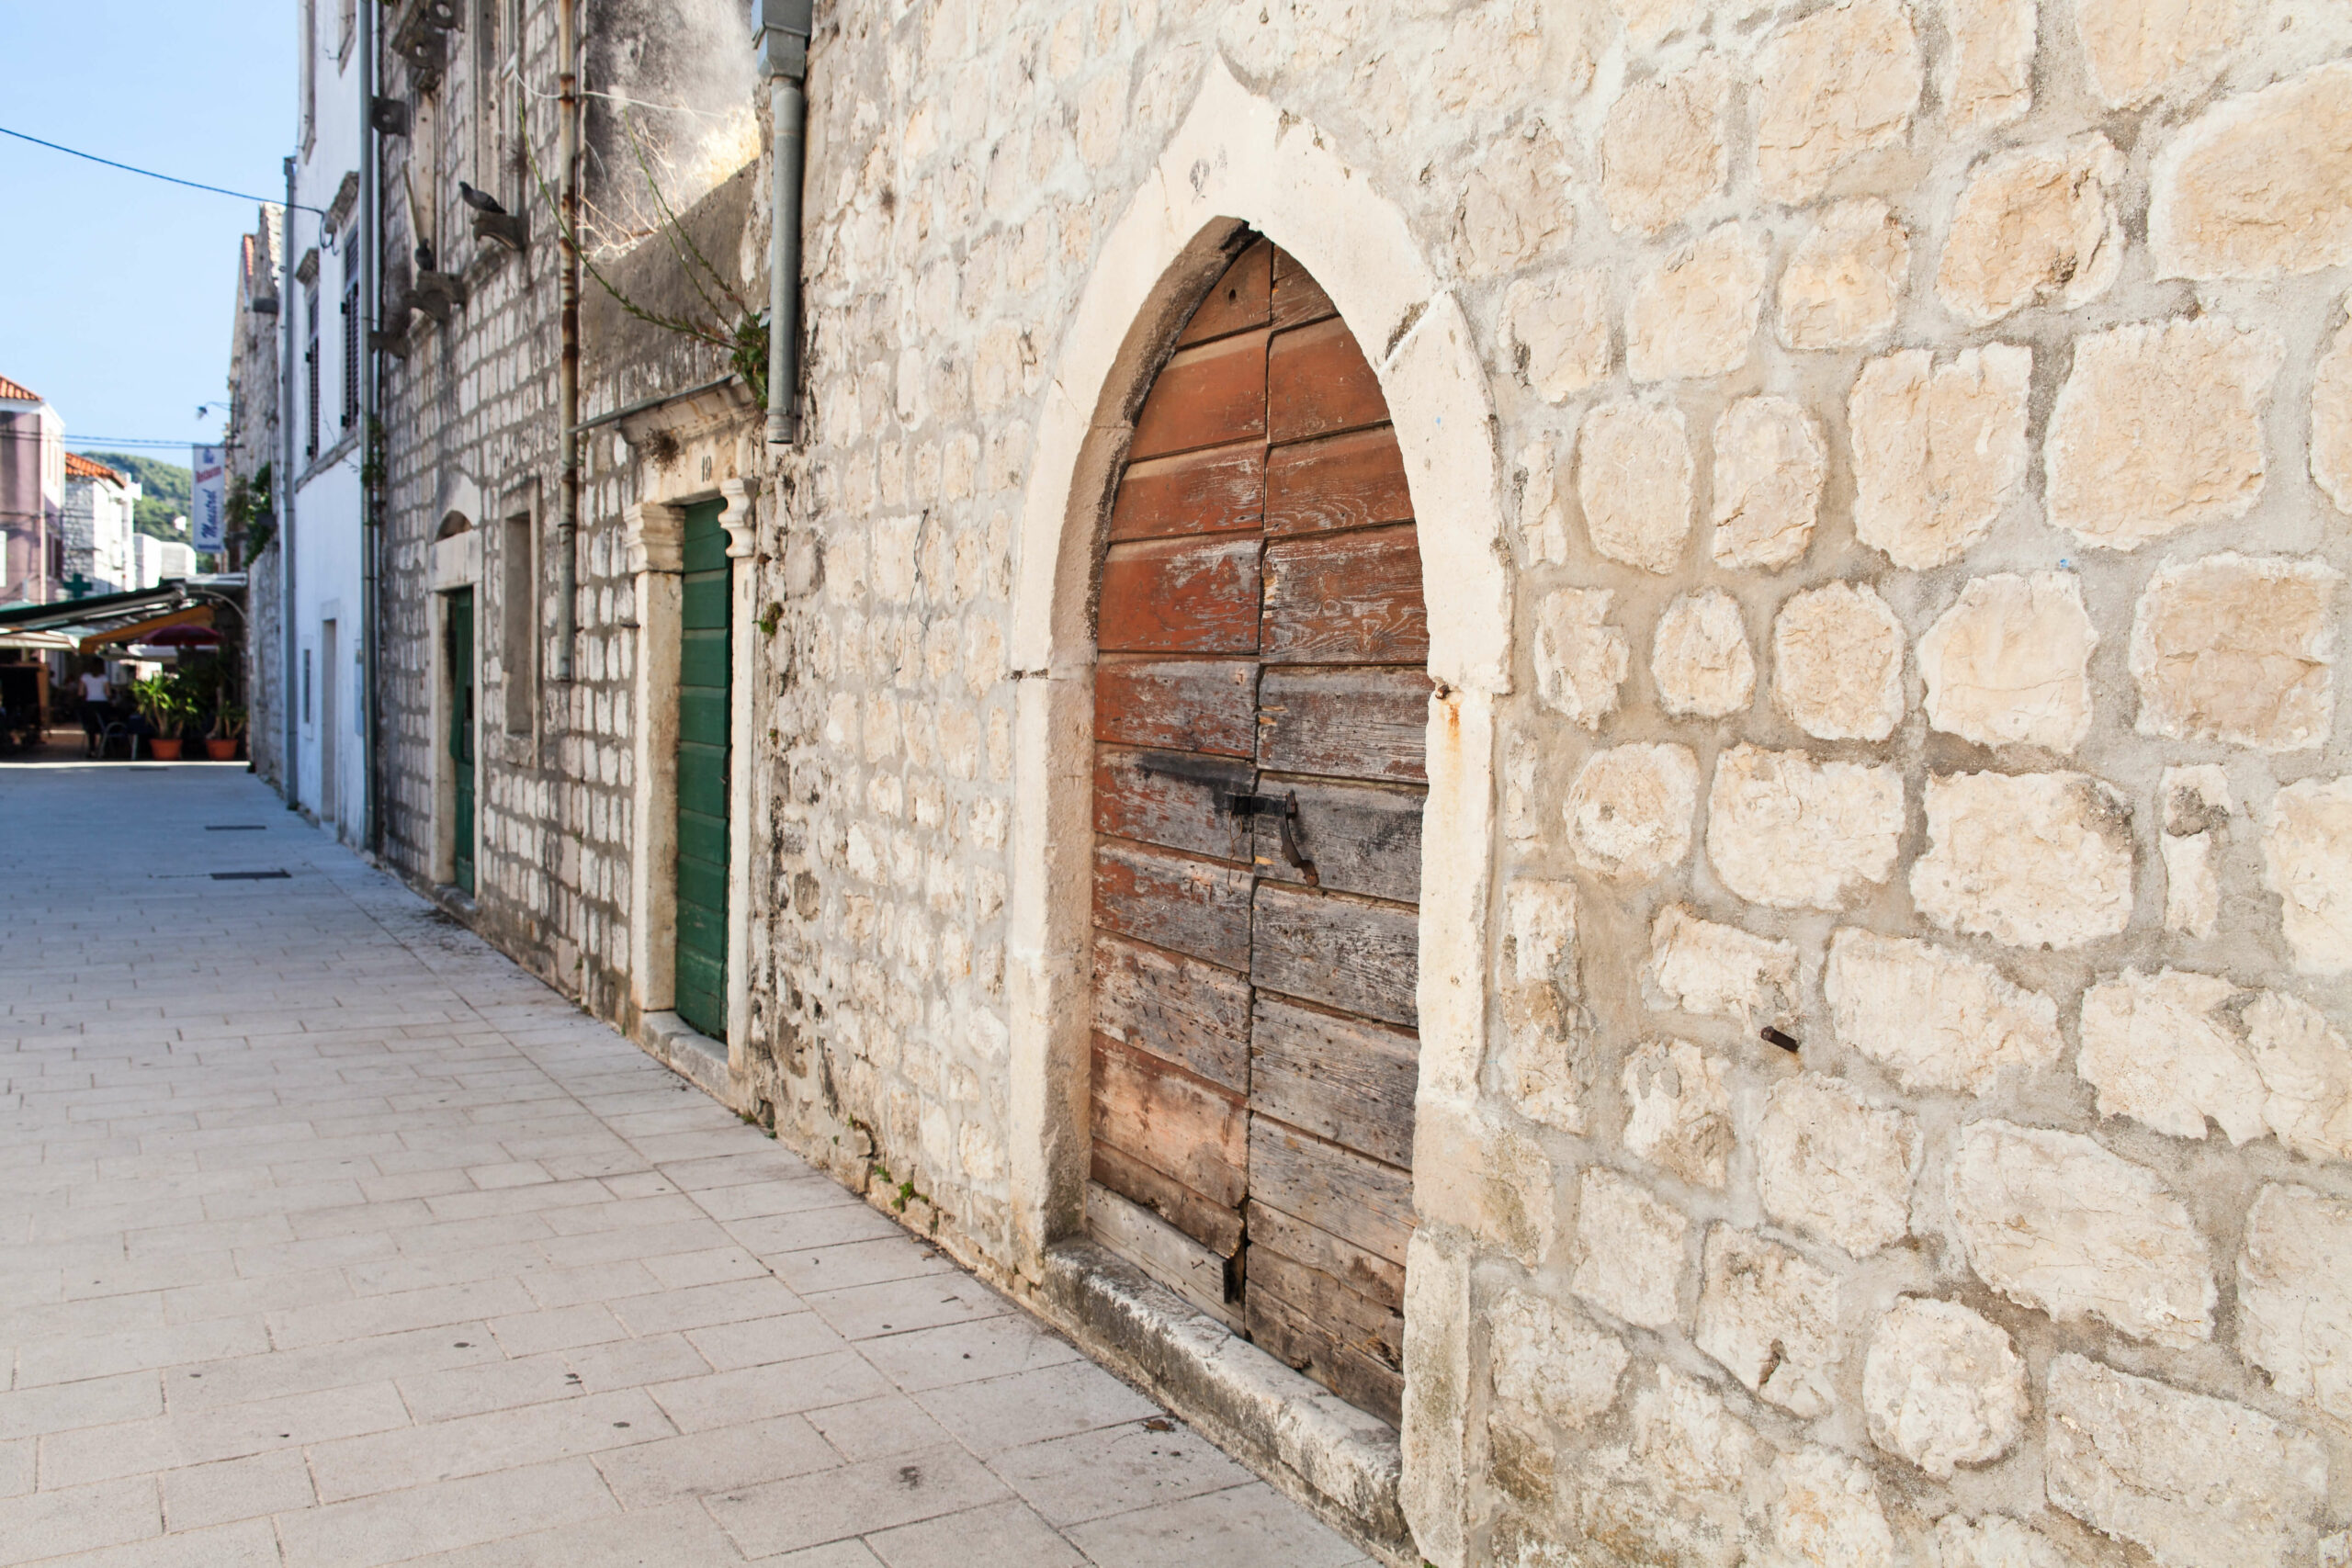 Ston Croatia most beautiful historic town - Nowhere & Everywhere - Sustainable Travel Lis Dingjan